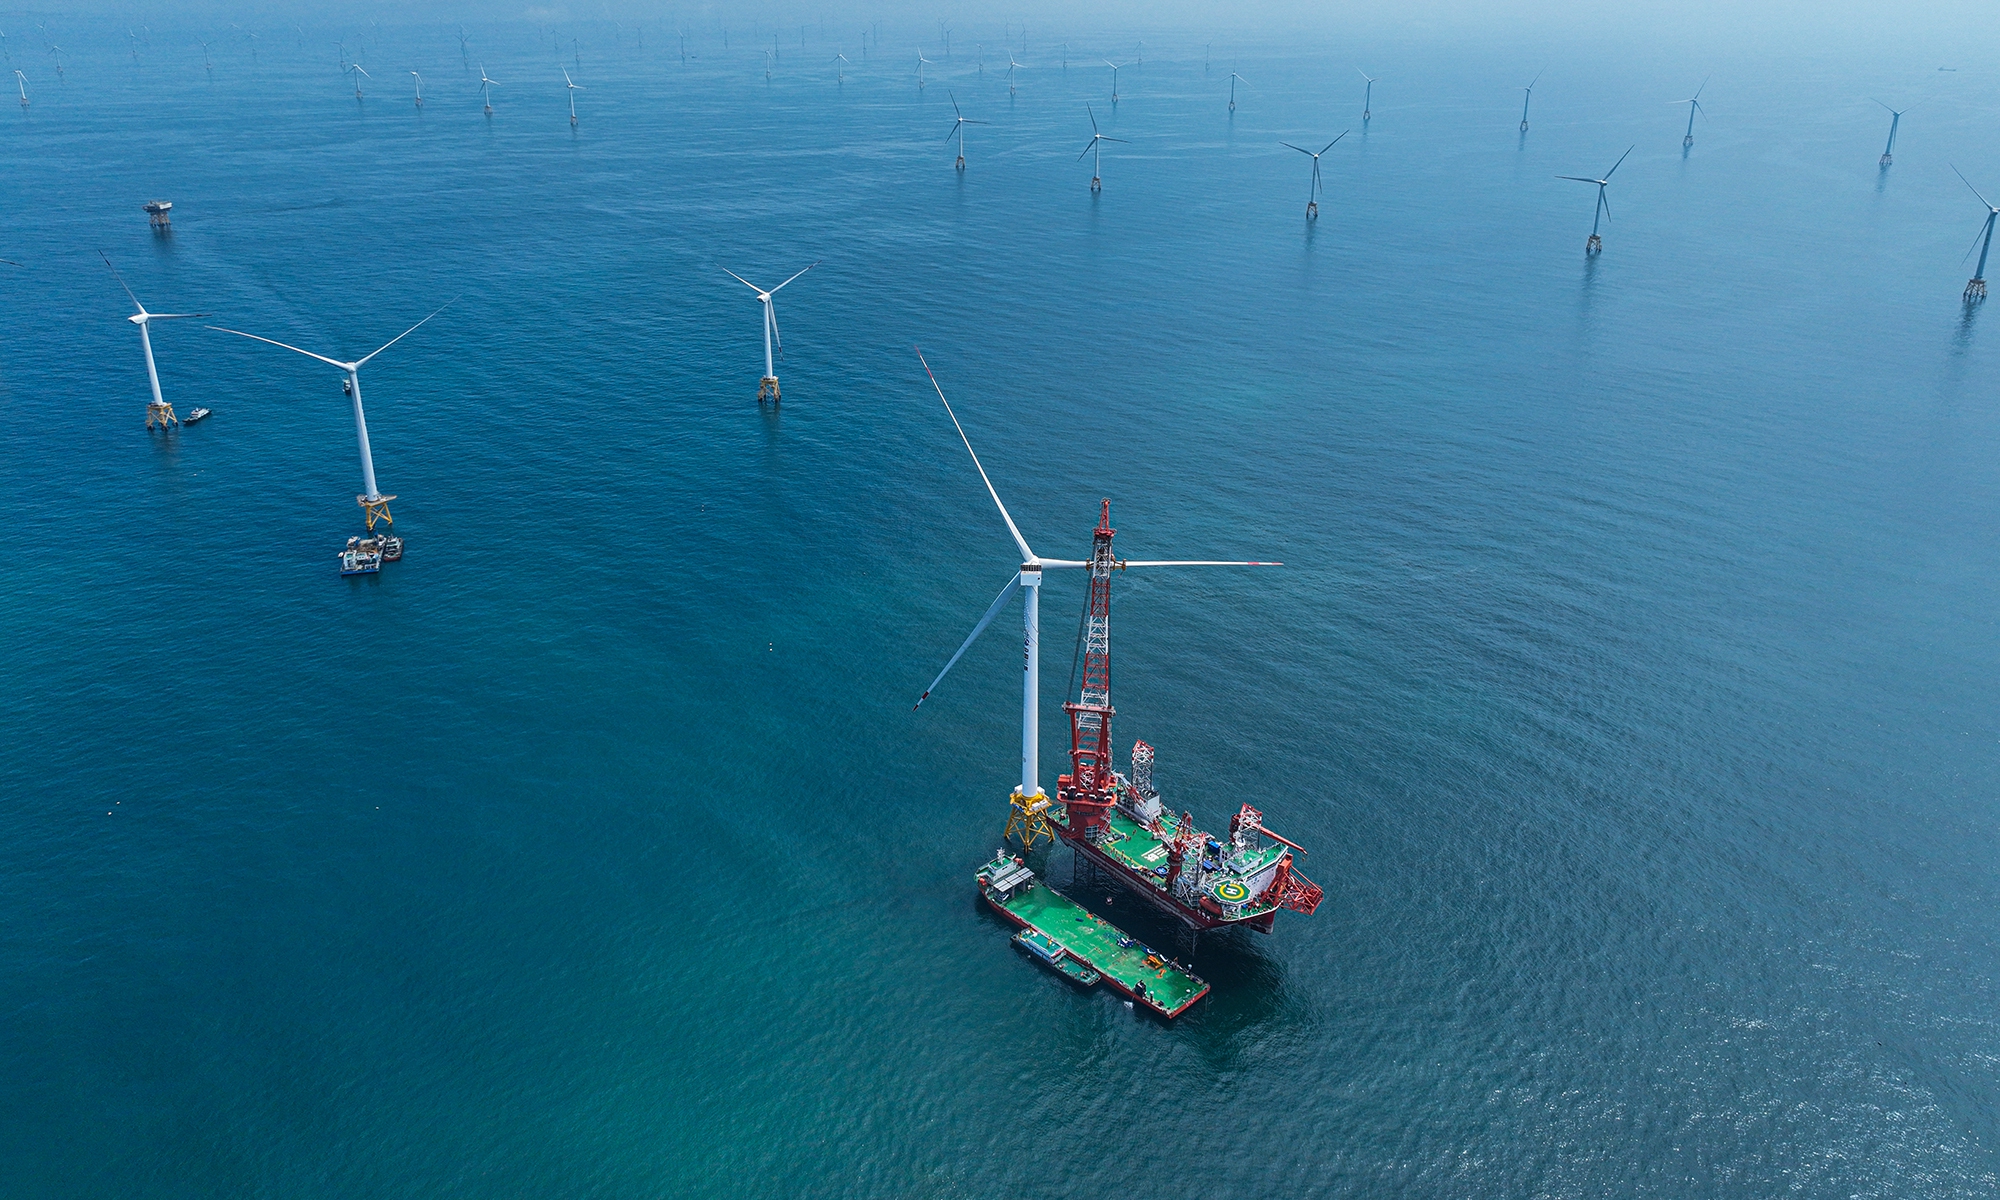 World's new largest wind turbine sweeps 10 football fields per spin